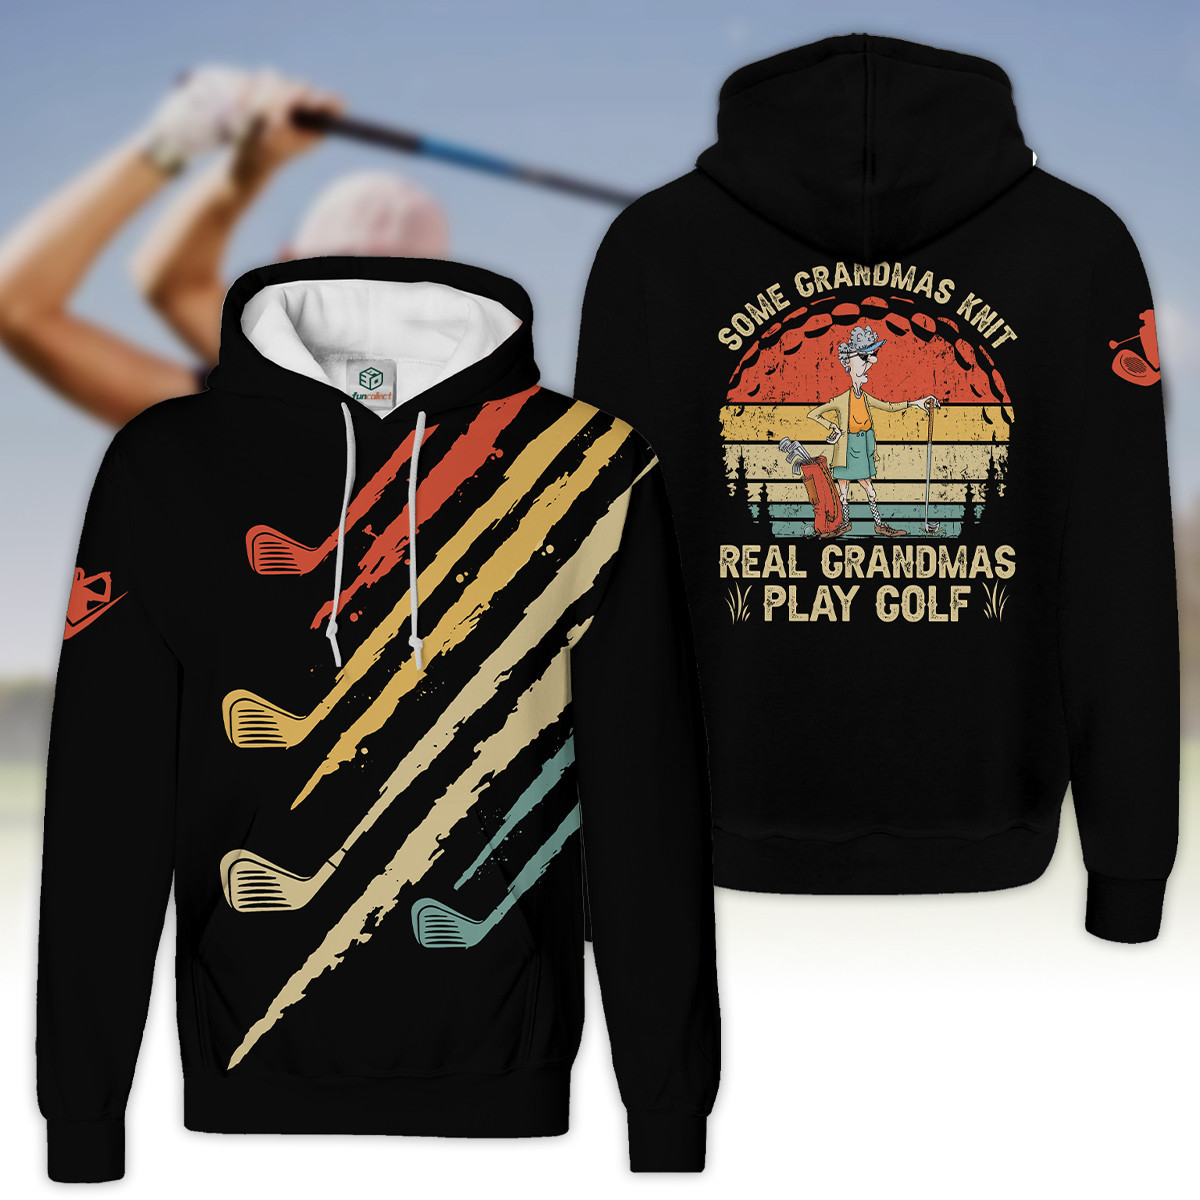 Some Grandmas Knit Real Grandmas Play Golf Vintage Gift Hoodie Zipper Hoodie Shirt